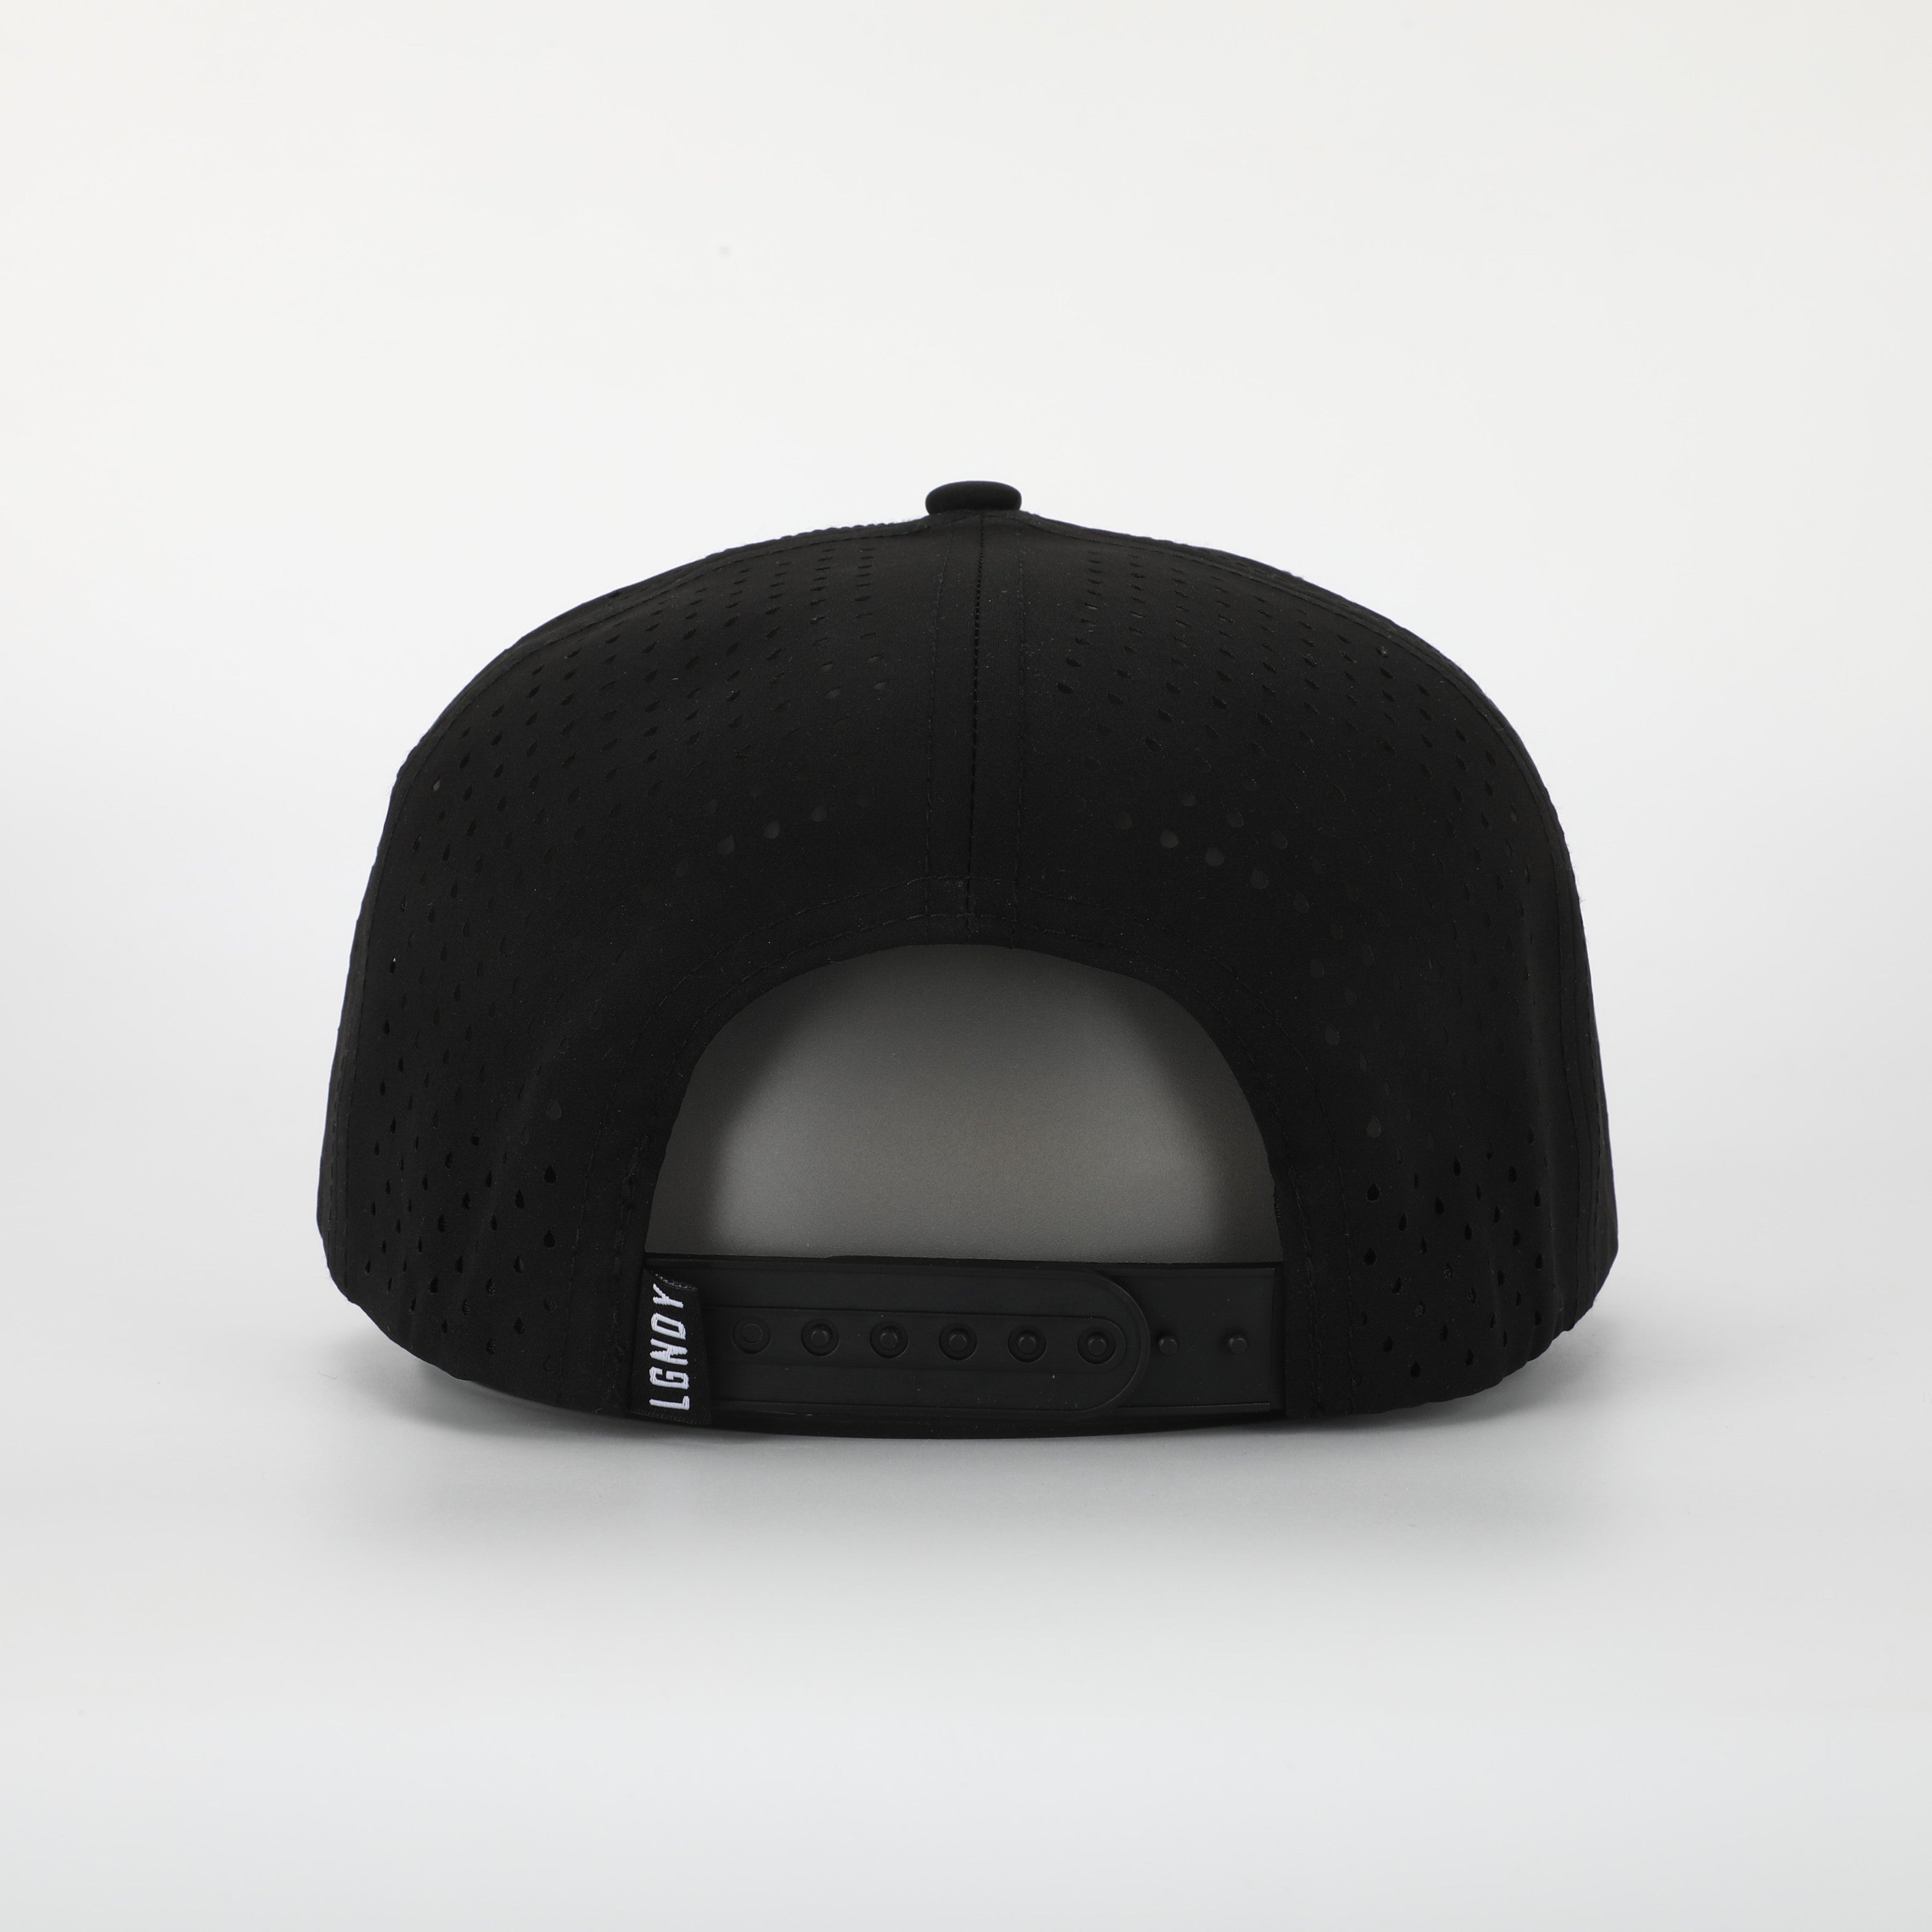 The Legendary Hat - Black